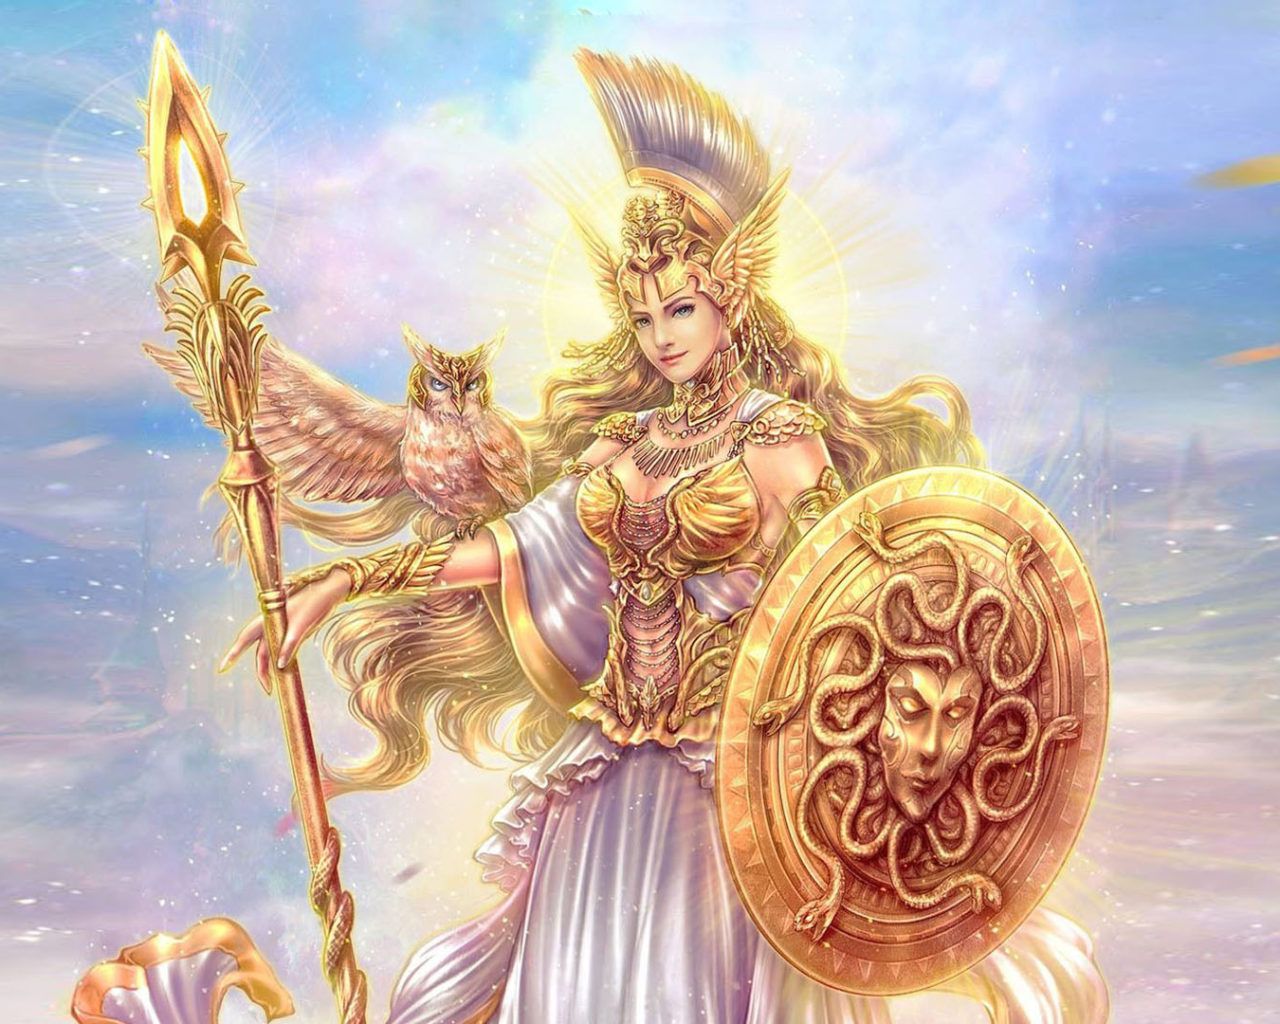 Athena the Goddess of War fantasy art Desktop HD Wallpaper For PC Tablet And Mobile Download, Wallpaper13.com